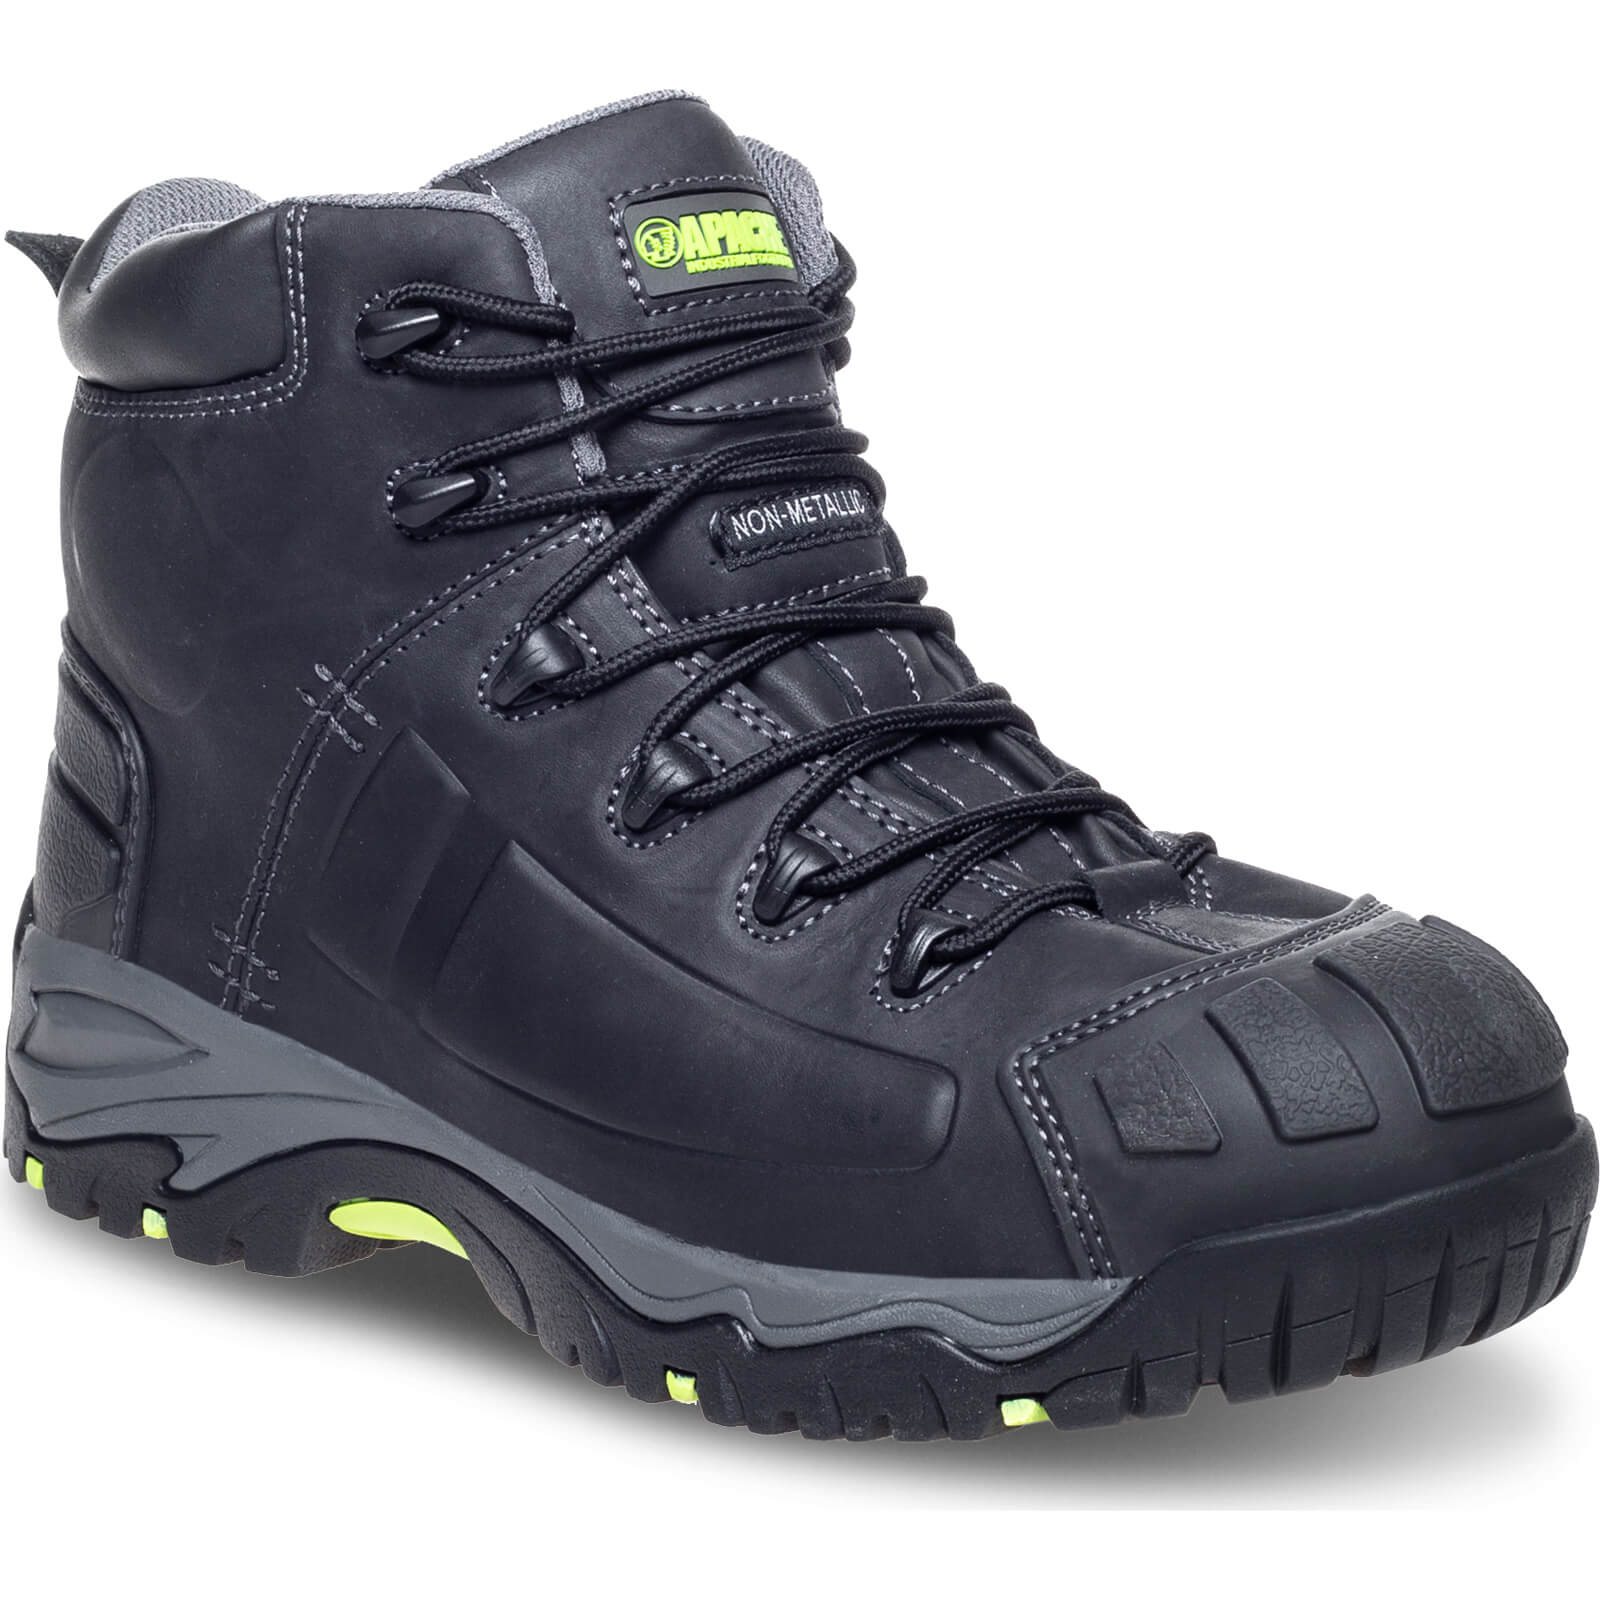 Apache Mercury Non Metallic Waterproof Safety Boots Black Size 8